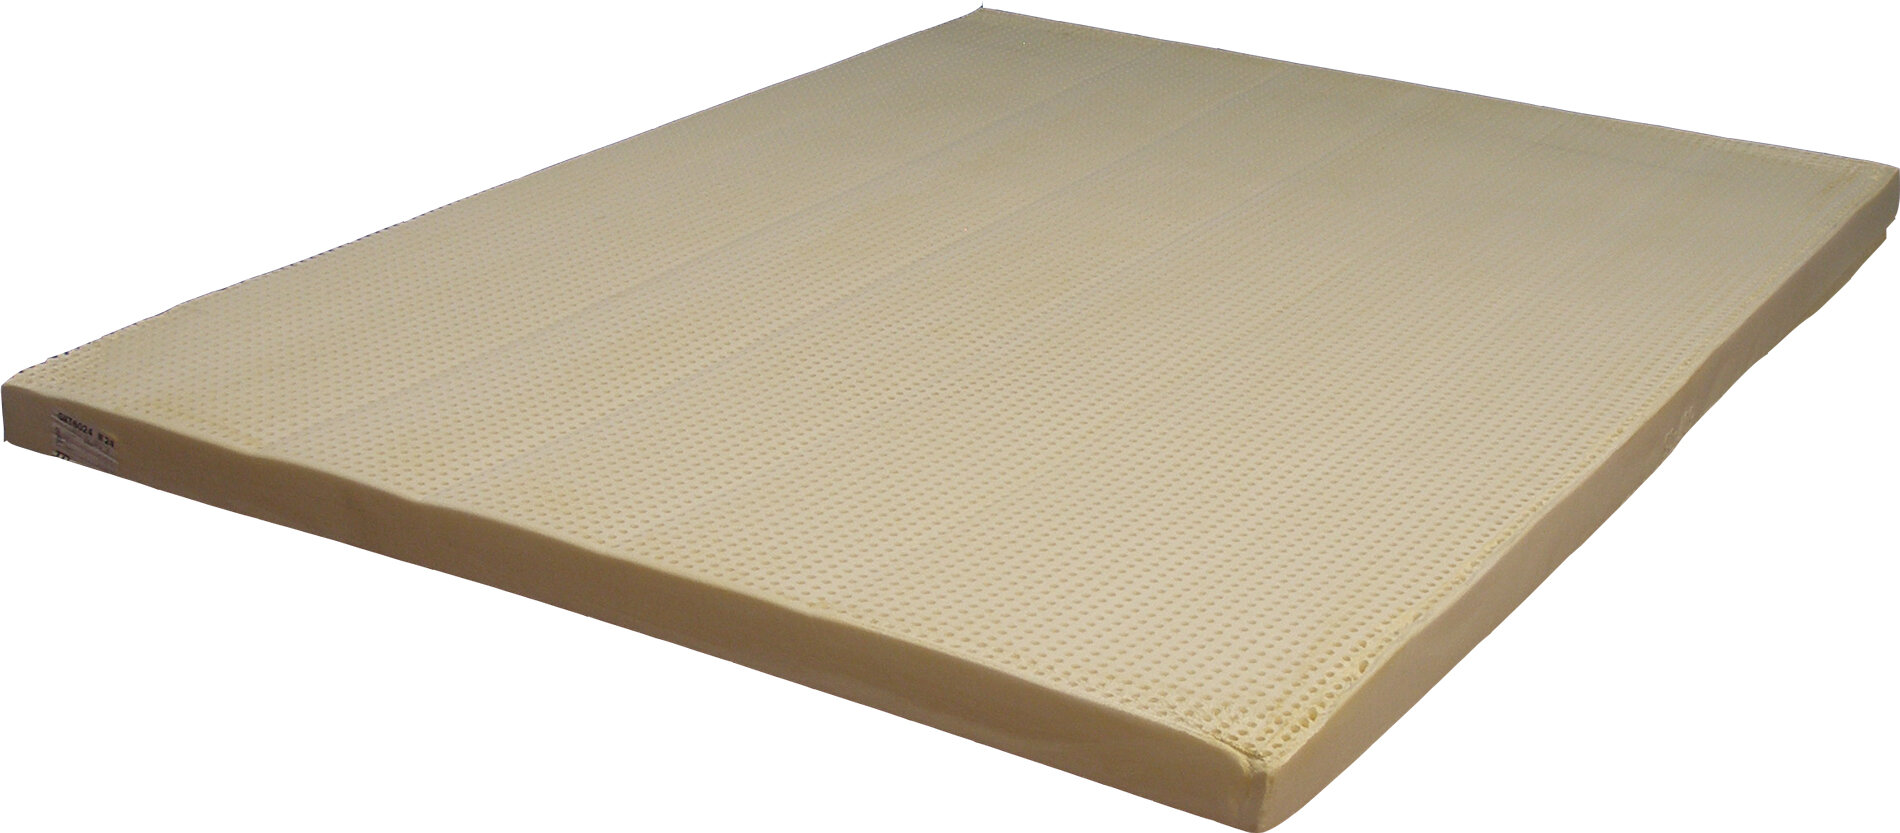 latex foam mattress foundation reviews